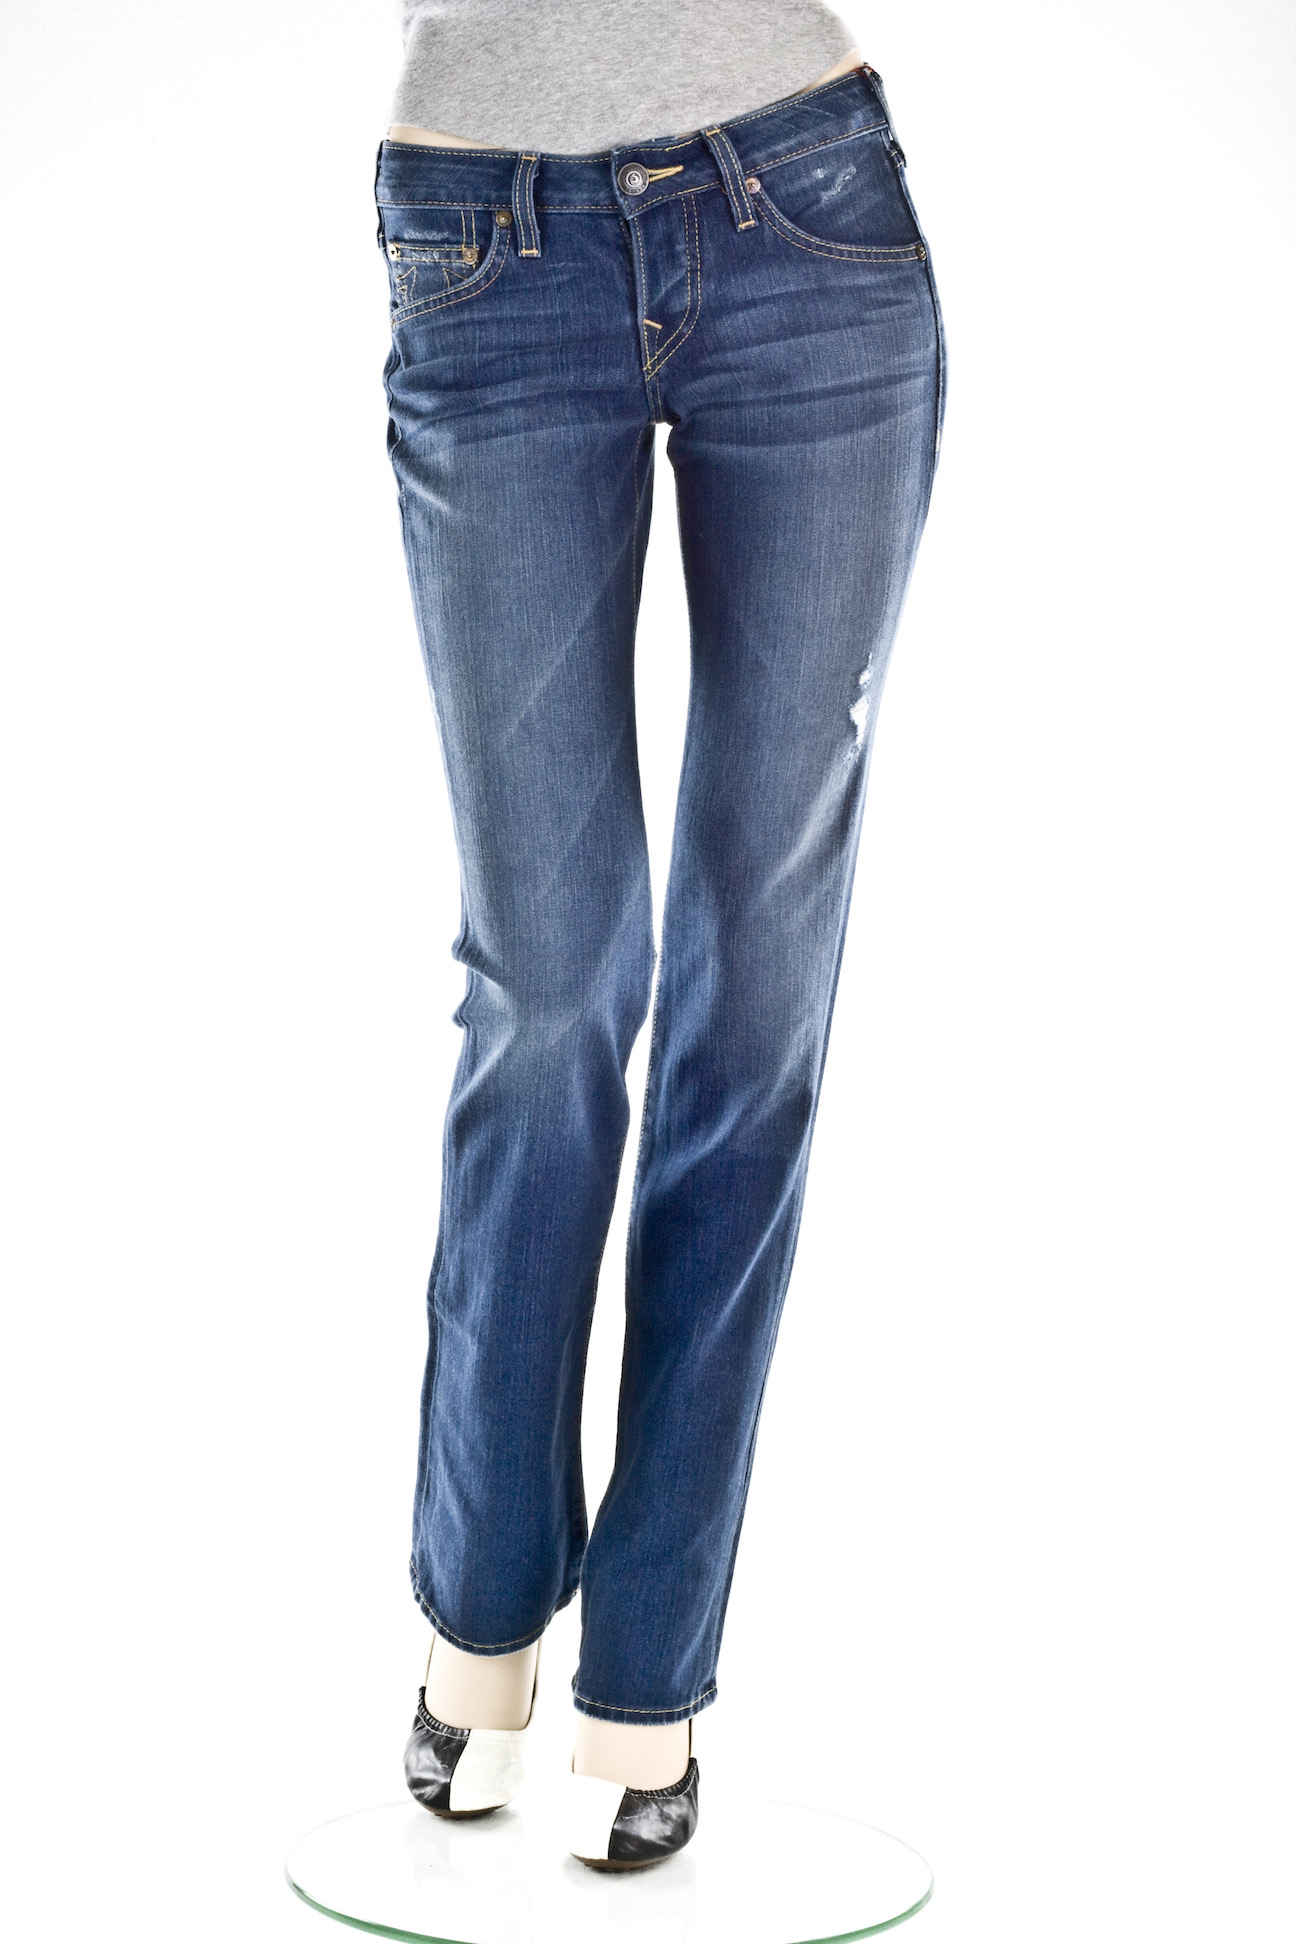 Женские джинсы True Religion "Буткат" JOHNY BLT JEAN интернет-магазин Fashion Jeans